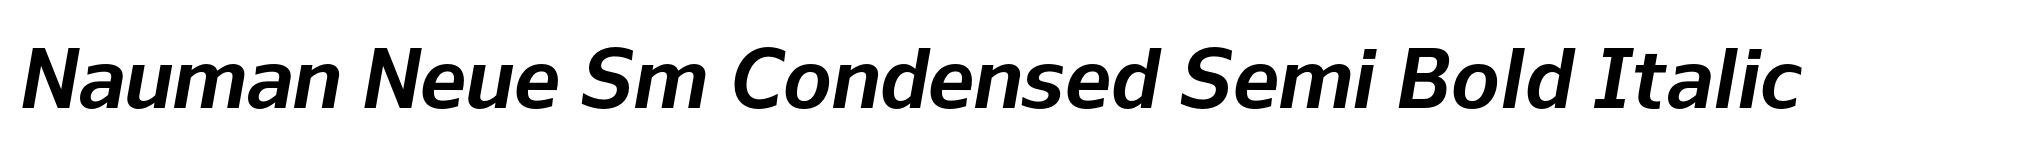 Nauman Neue Sm Condensed Semi Bold Italic image